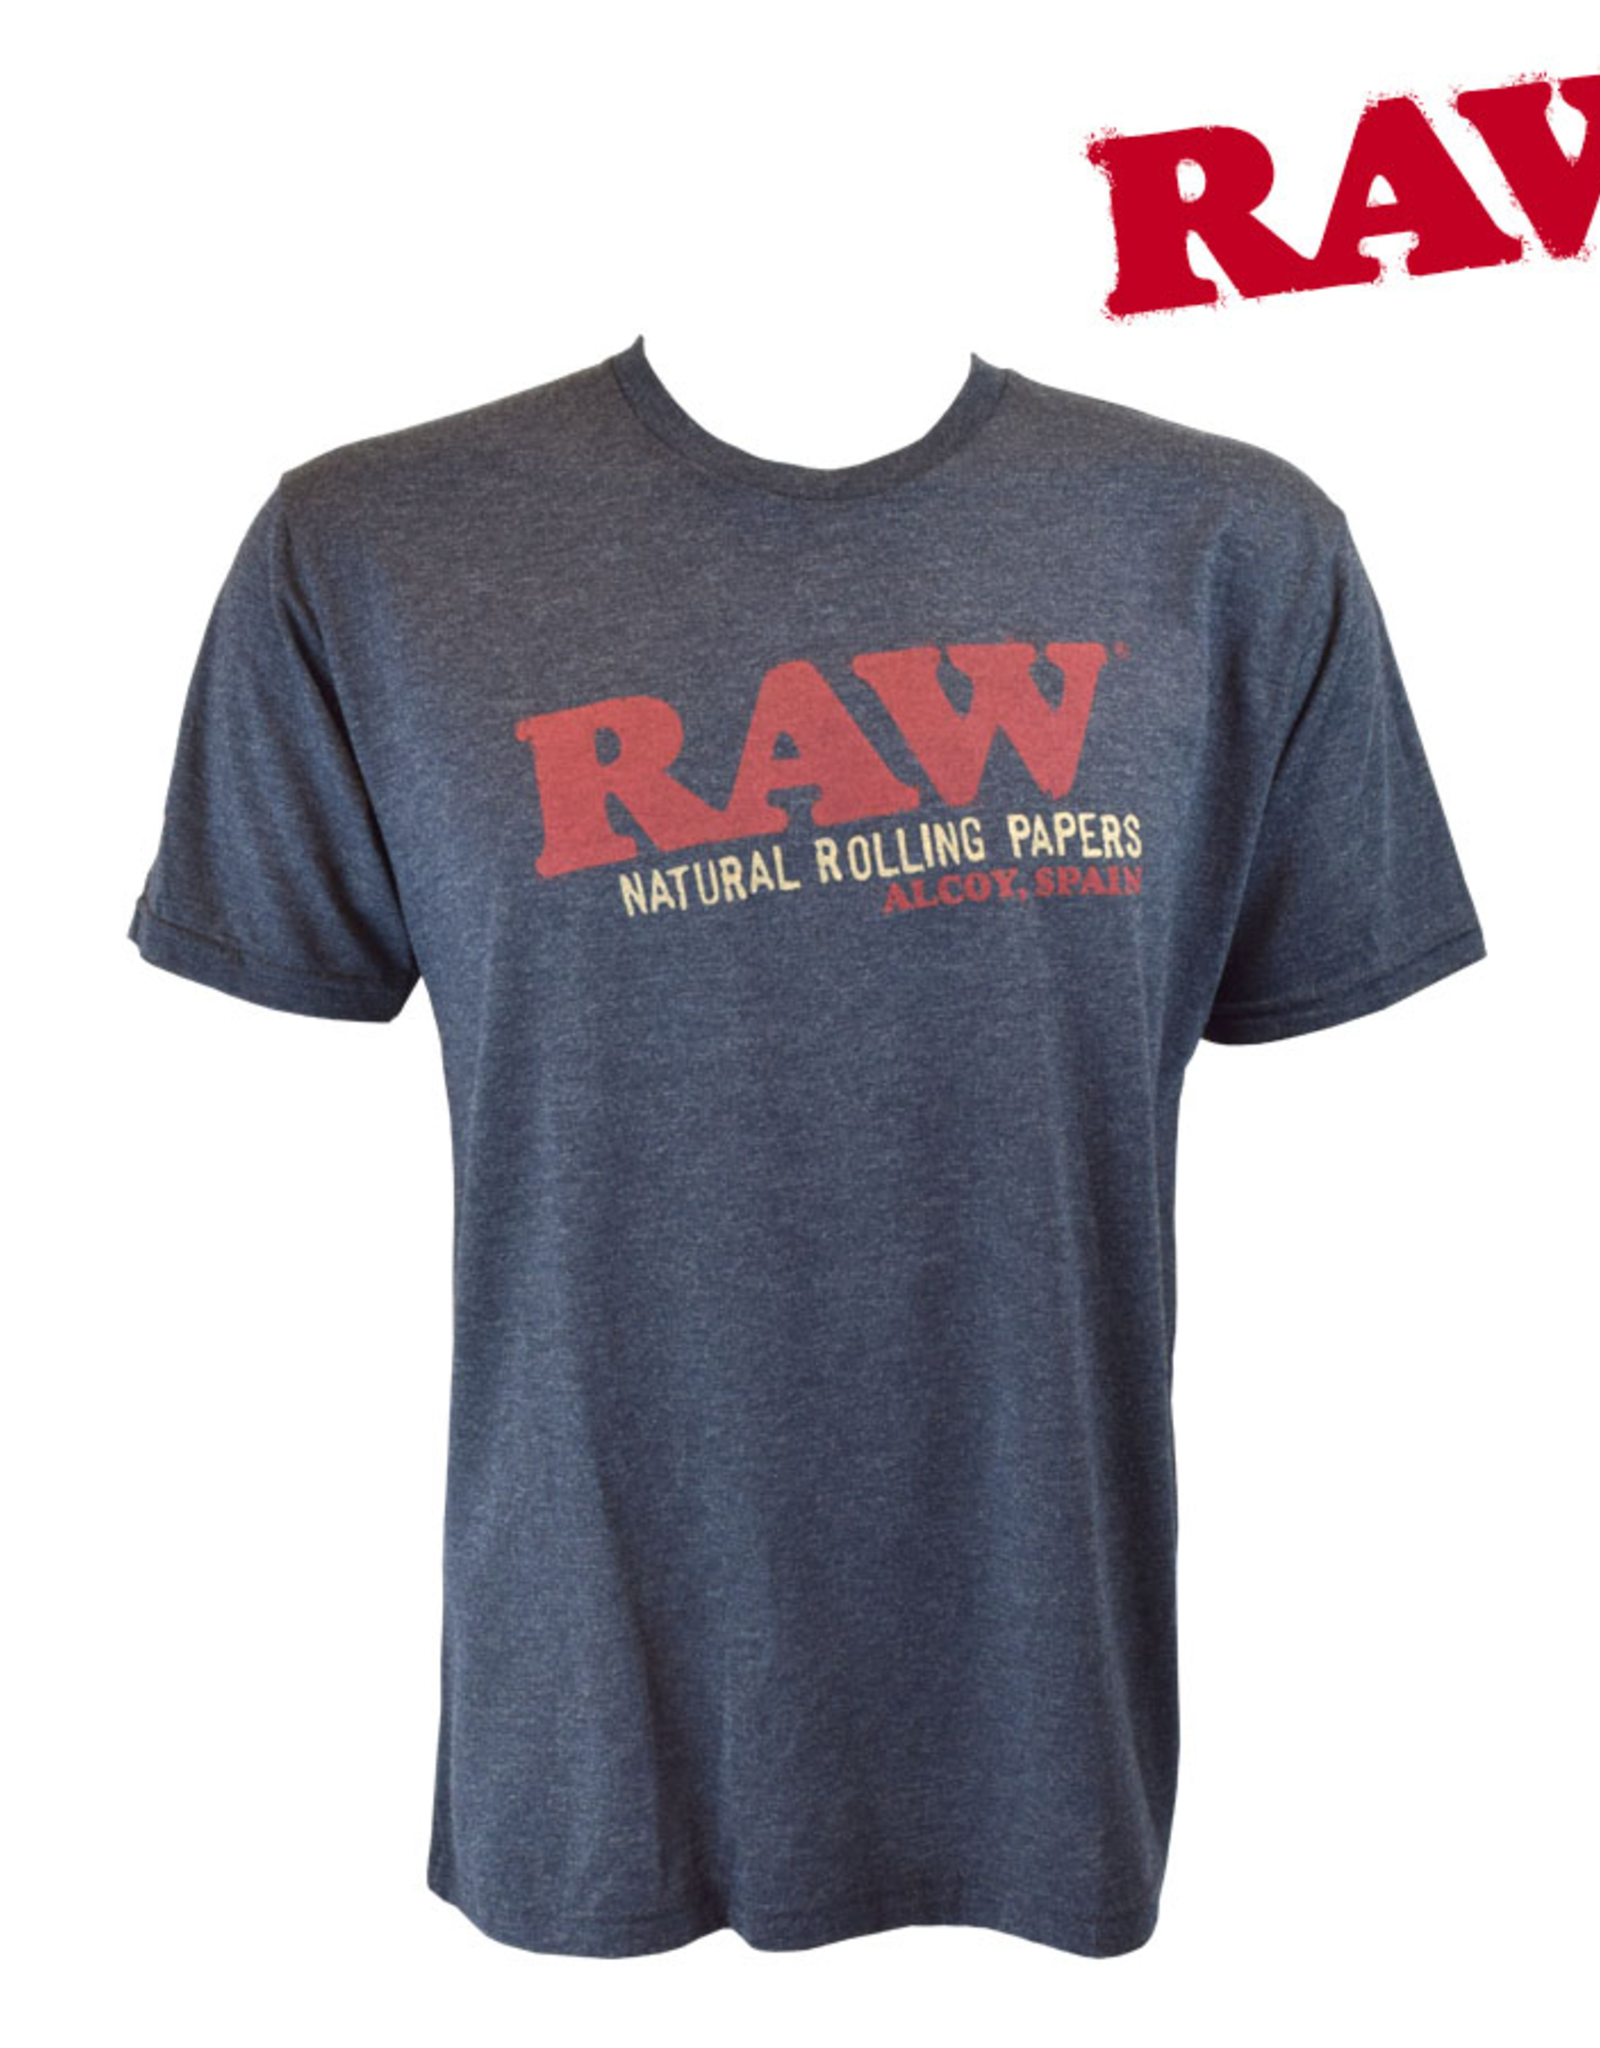 RAW RAW Vintage Black T-Shirt